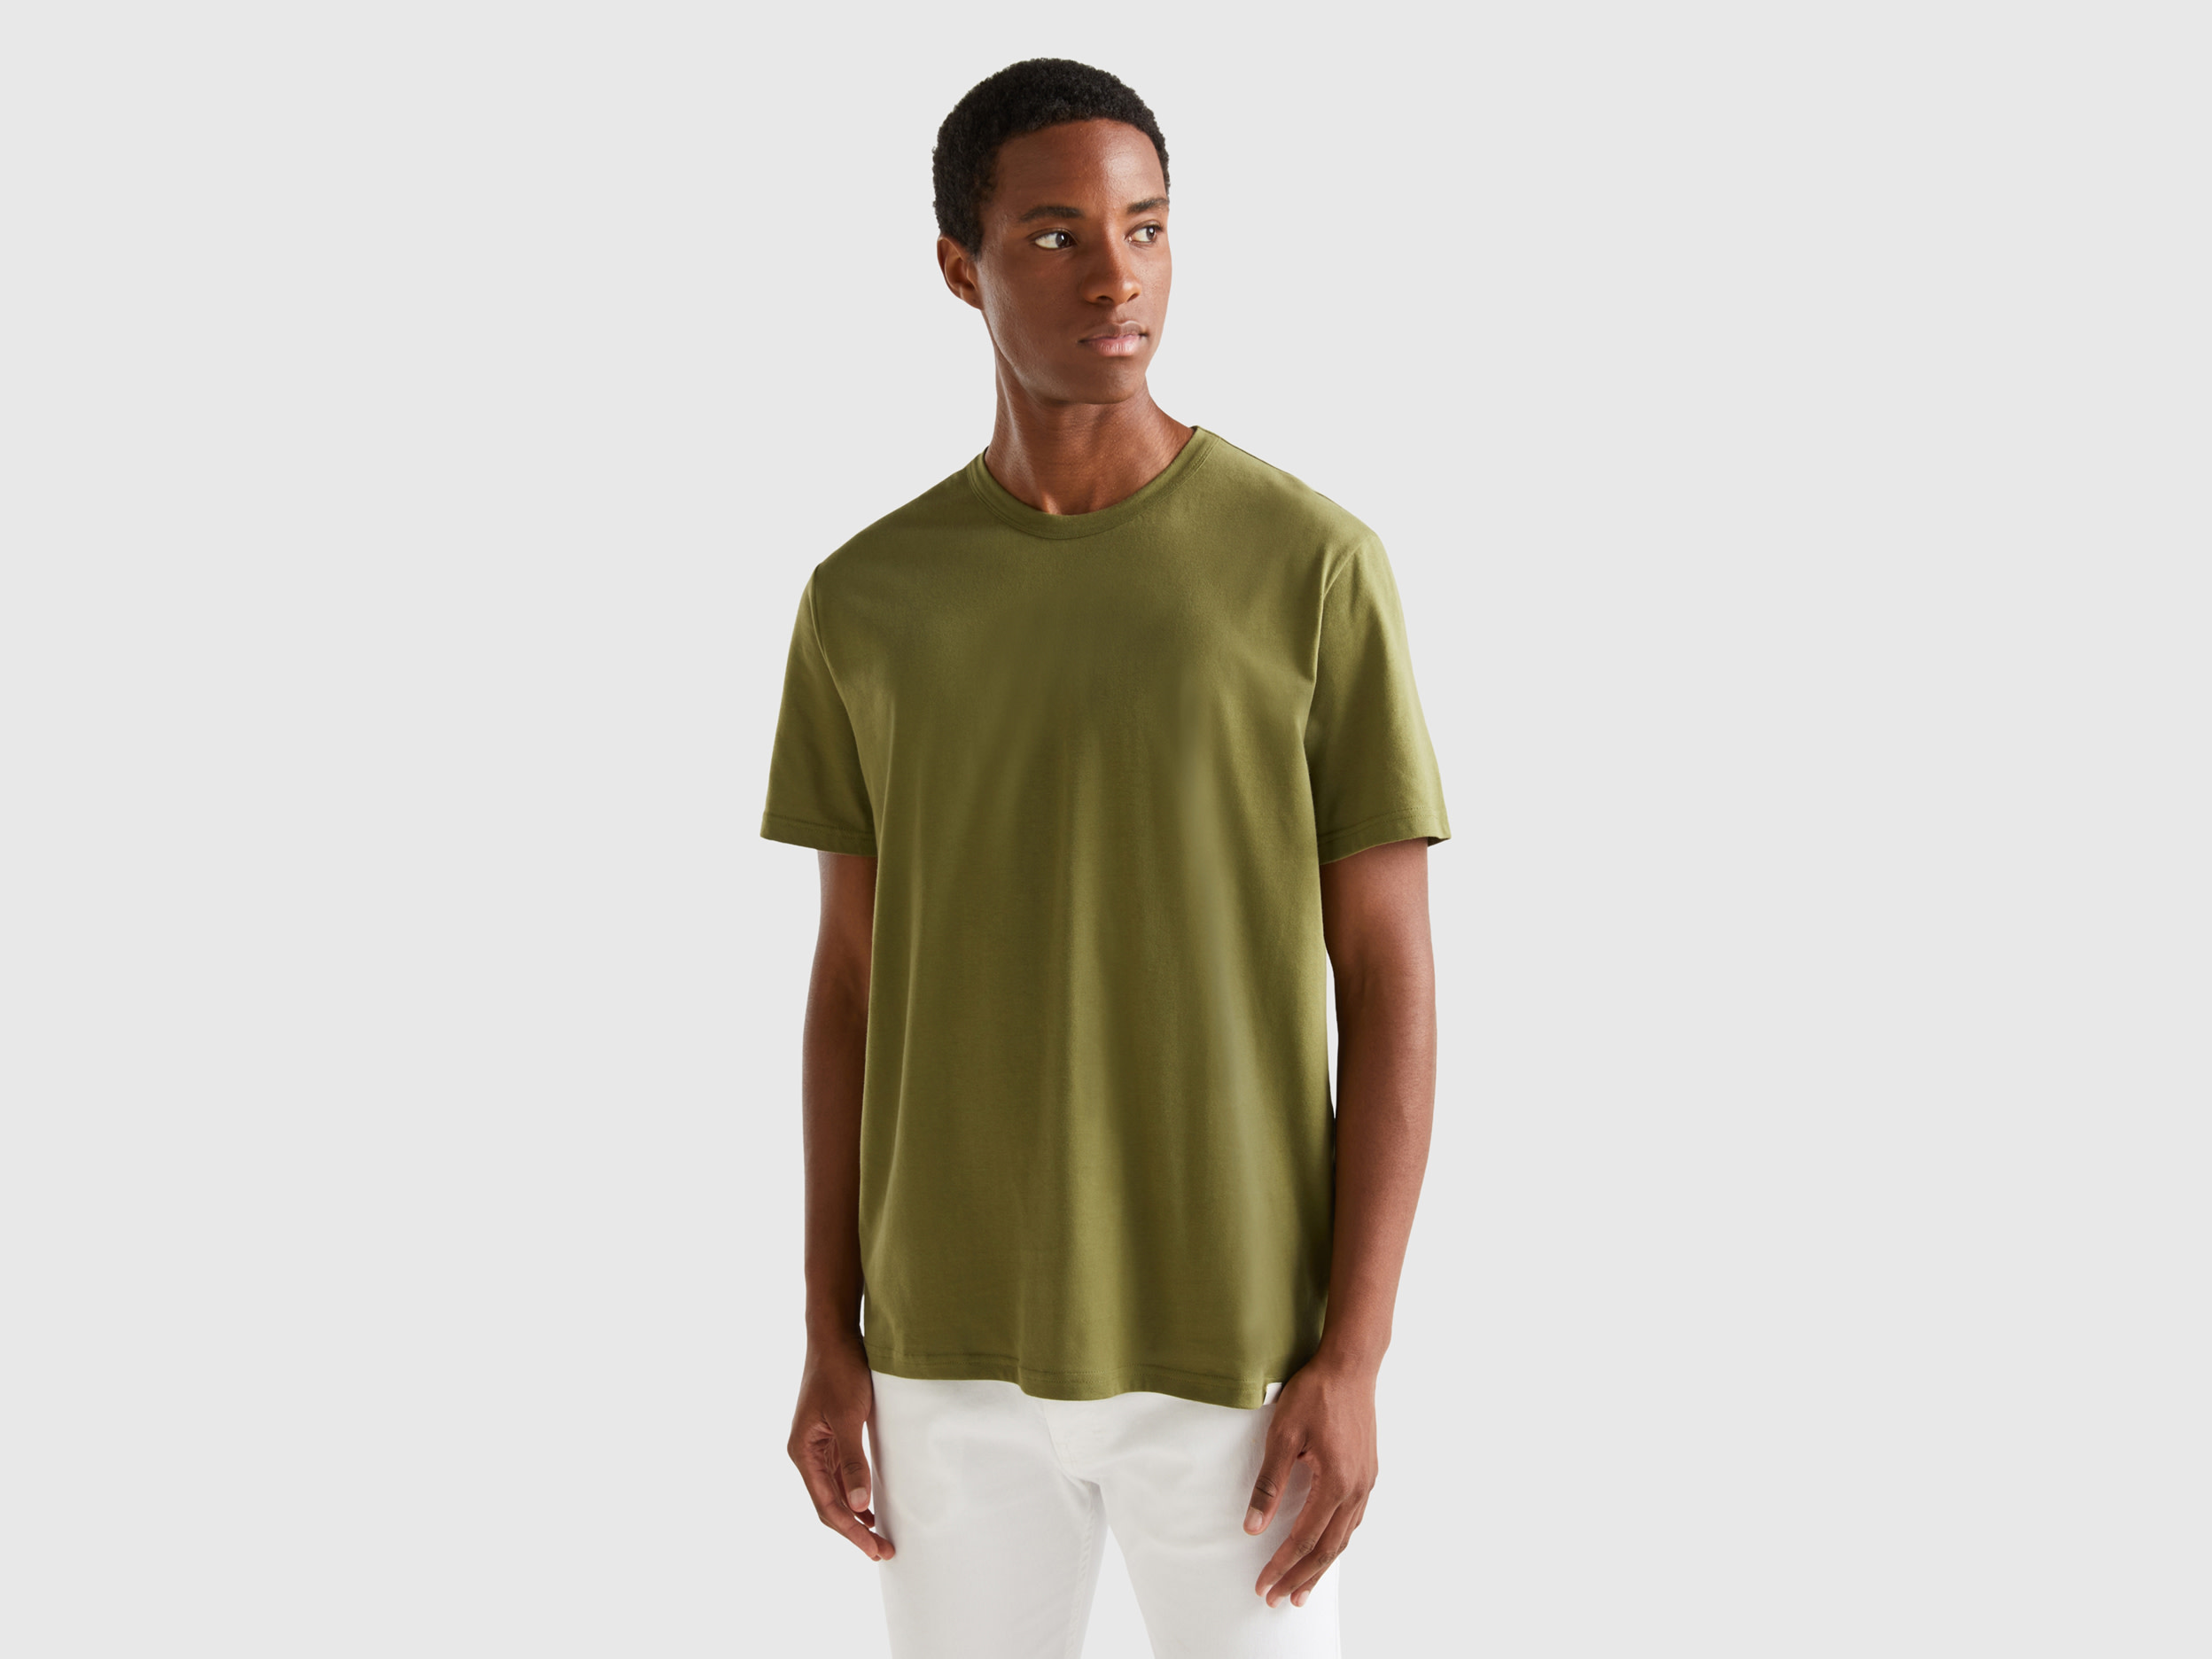 Benetton, T-shirt In Warm Cotton, size XXL, Military Green, Men